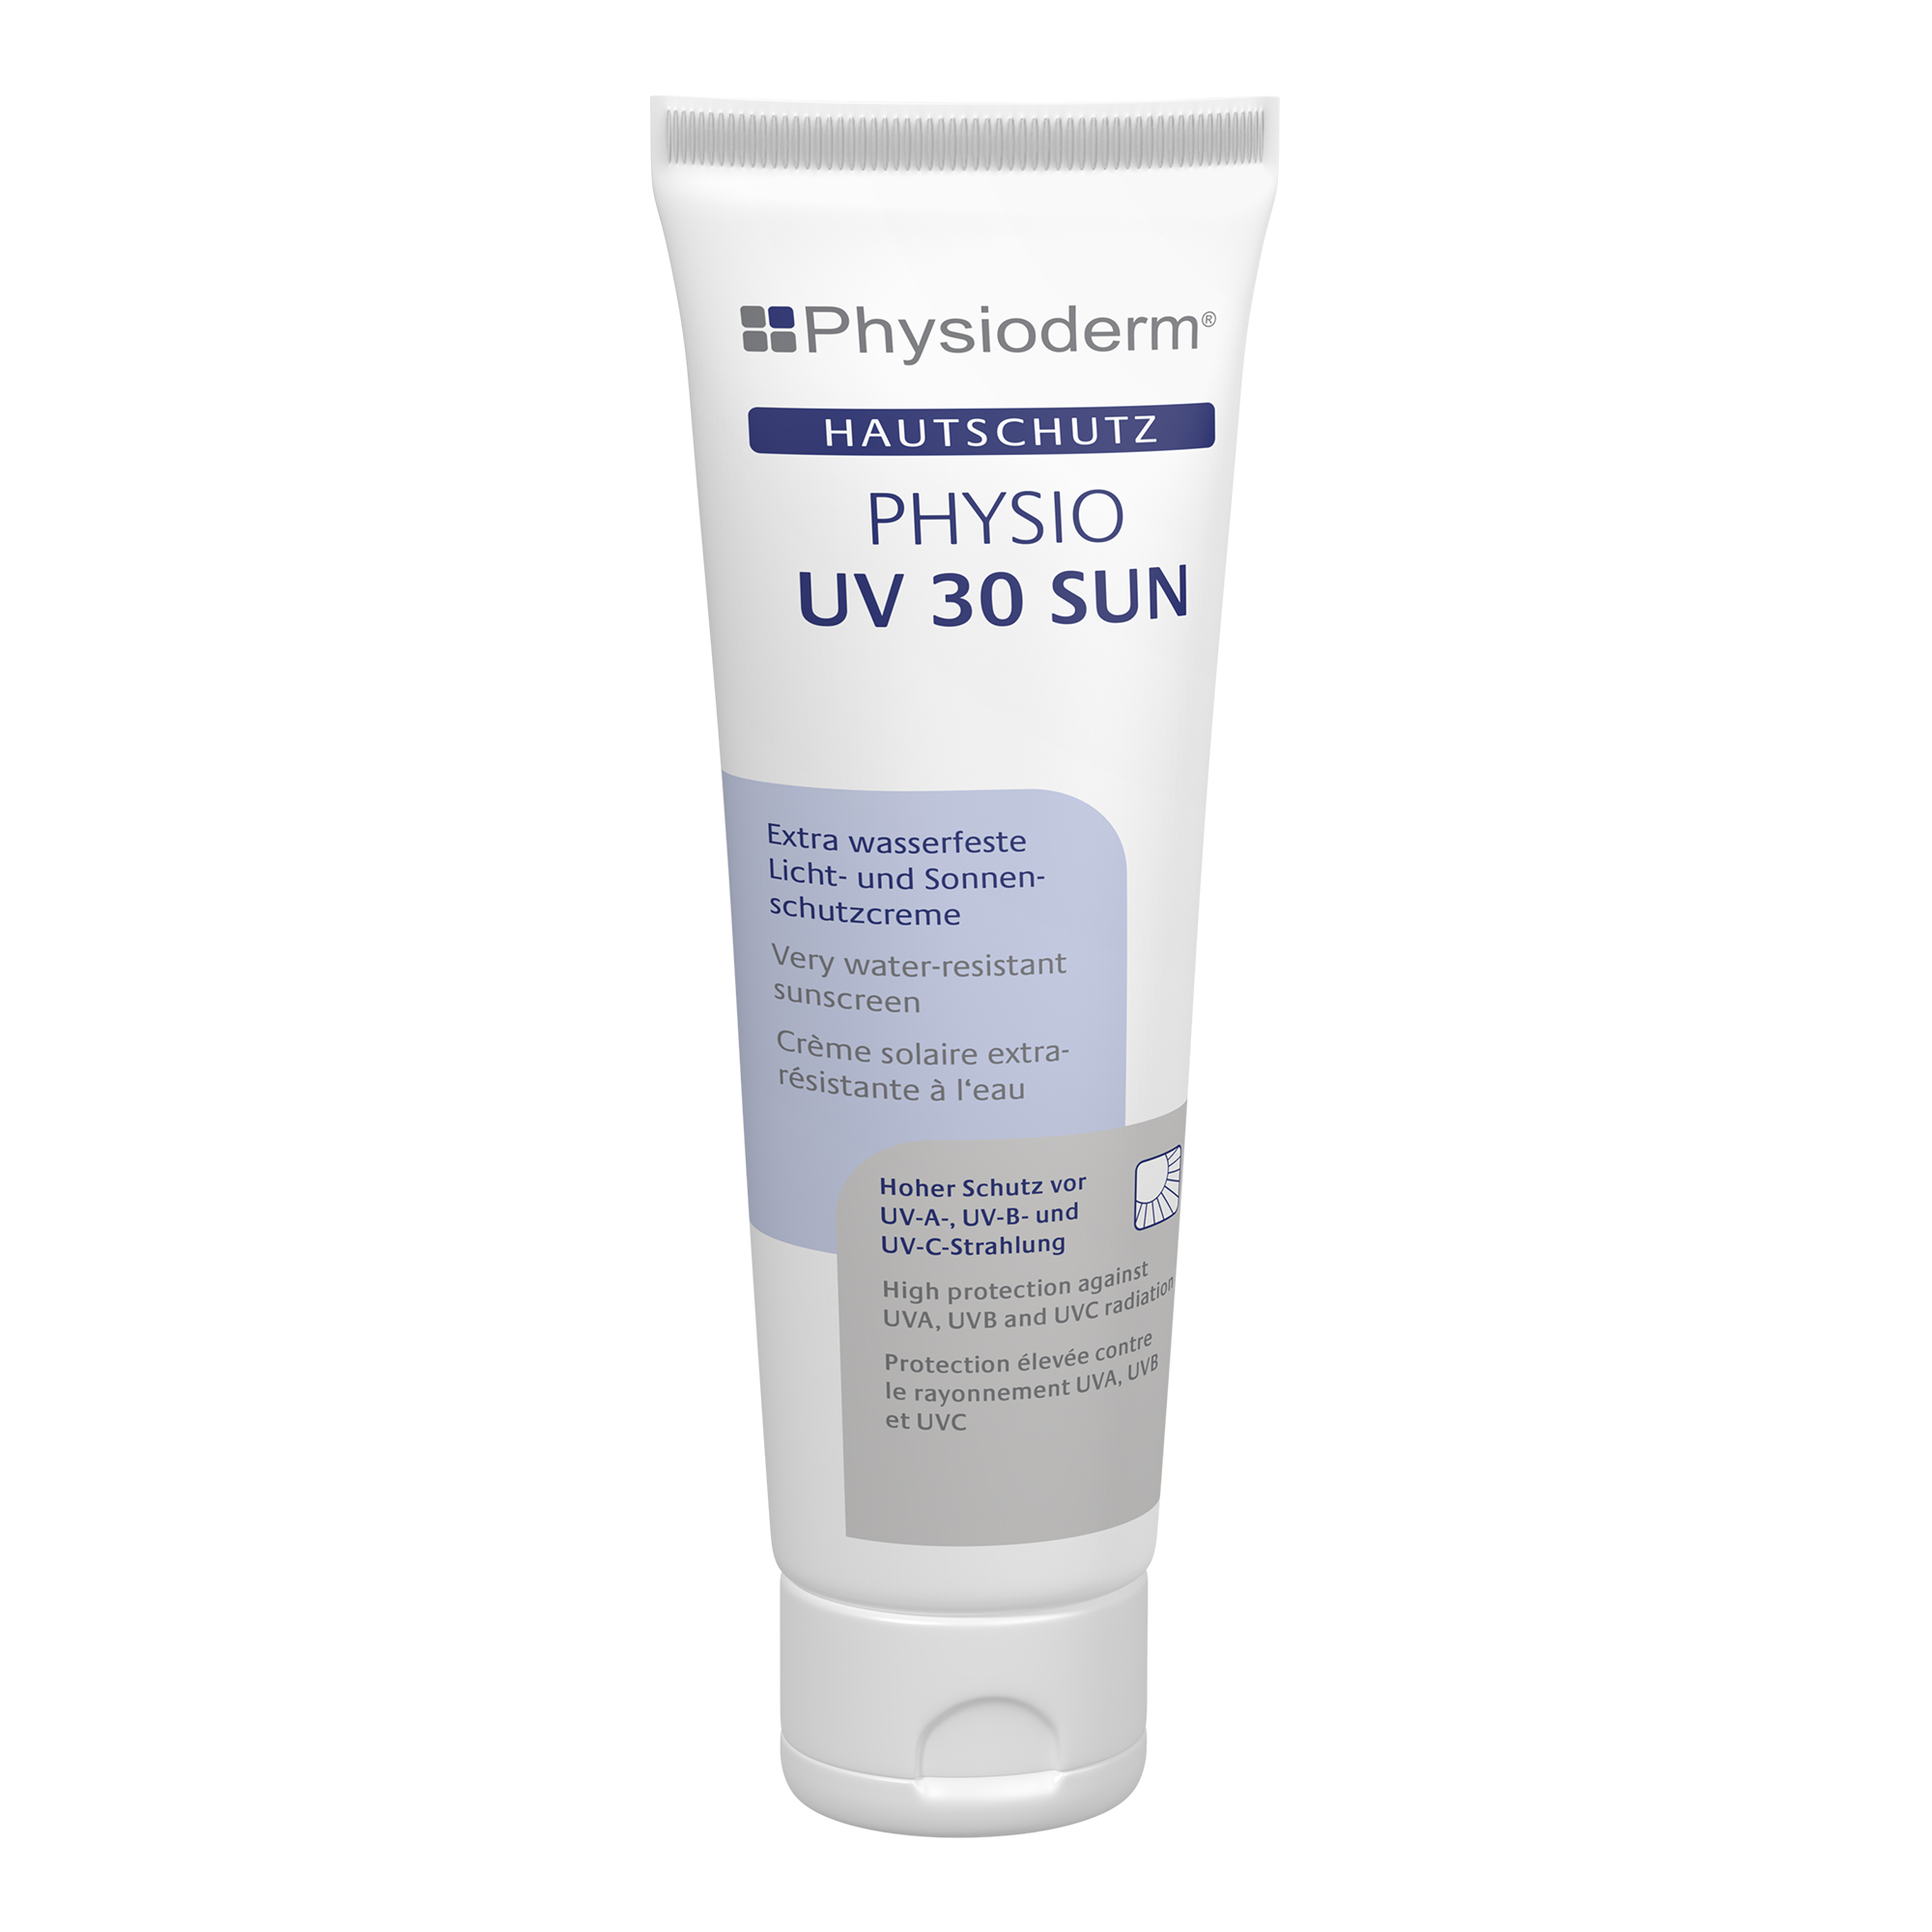 Physioderm Physio UV 30 Sun Hautschutzcreme